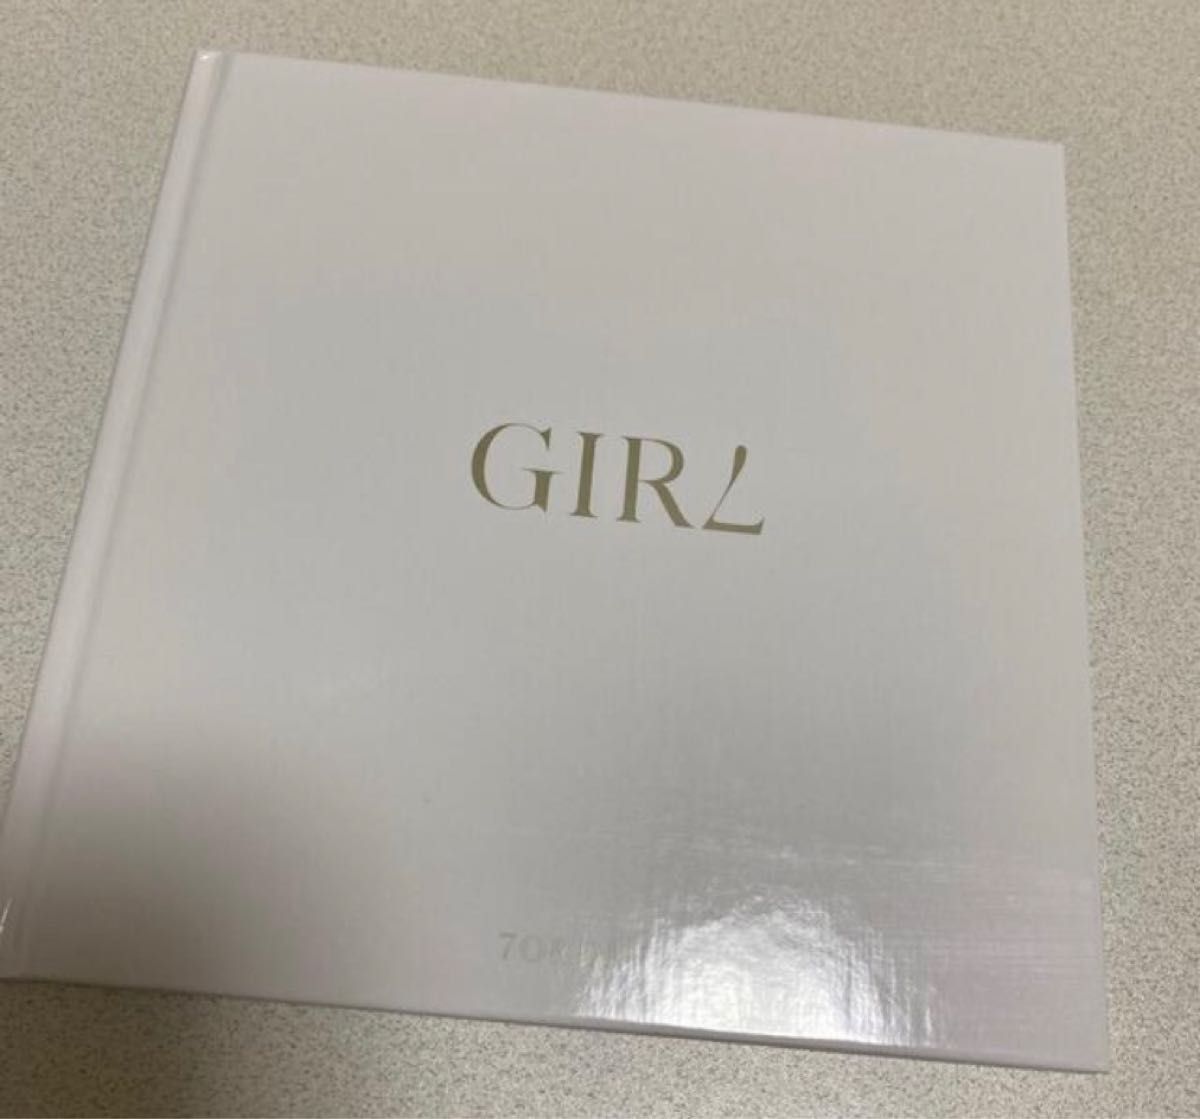 7ORDER 2ndシングル GIRL フォトブック付CD、上海イベントポストカード